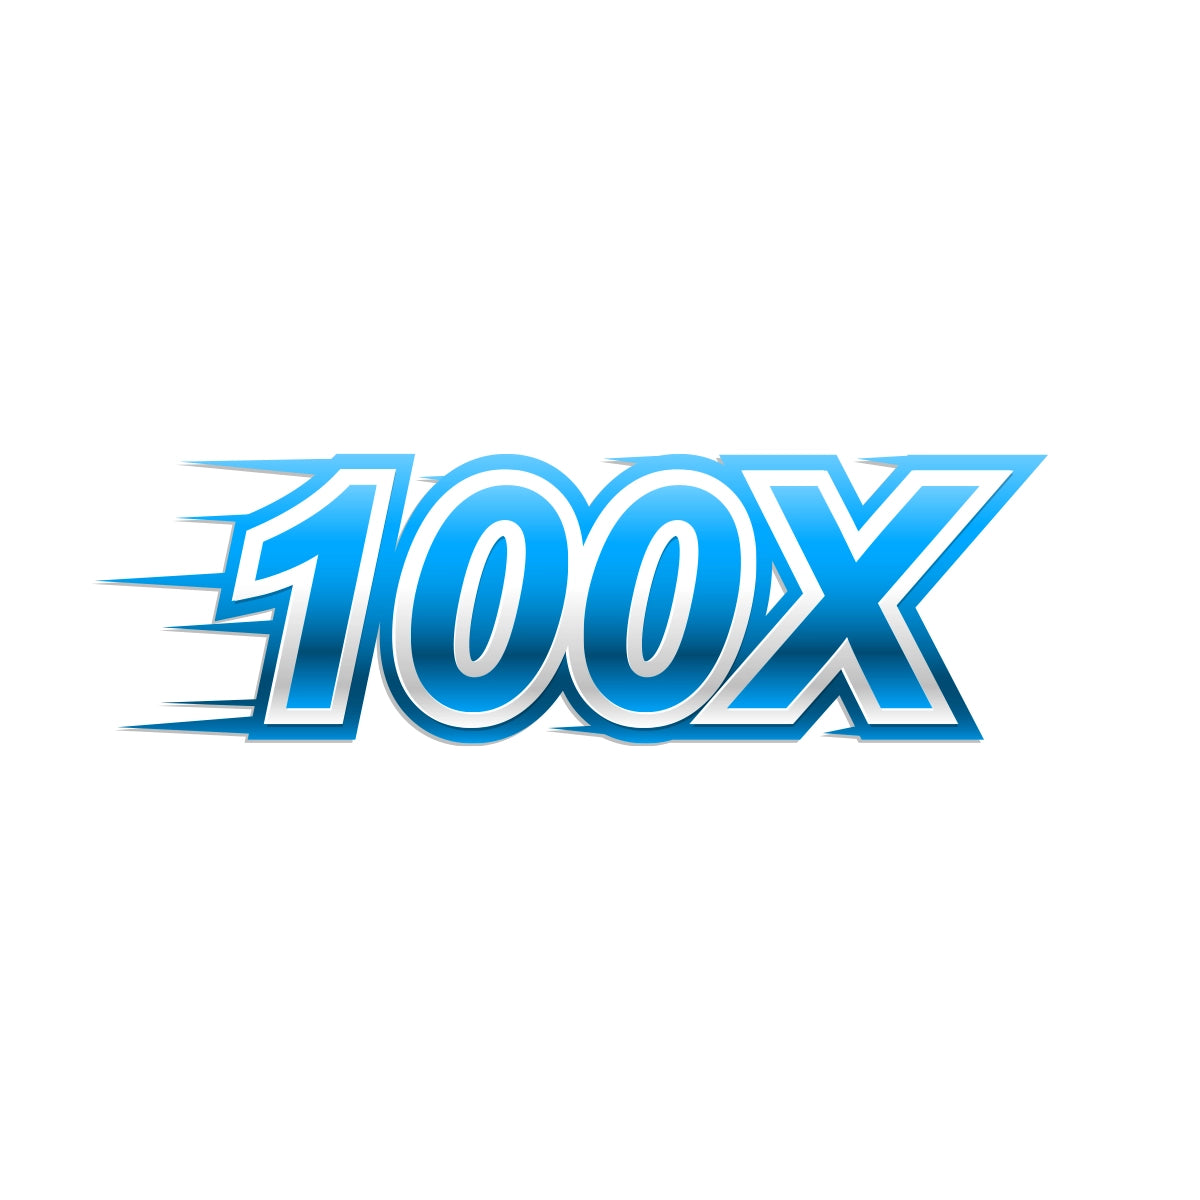 100xbiz.com